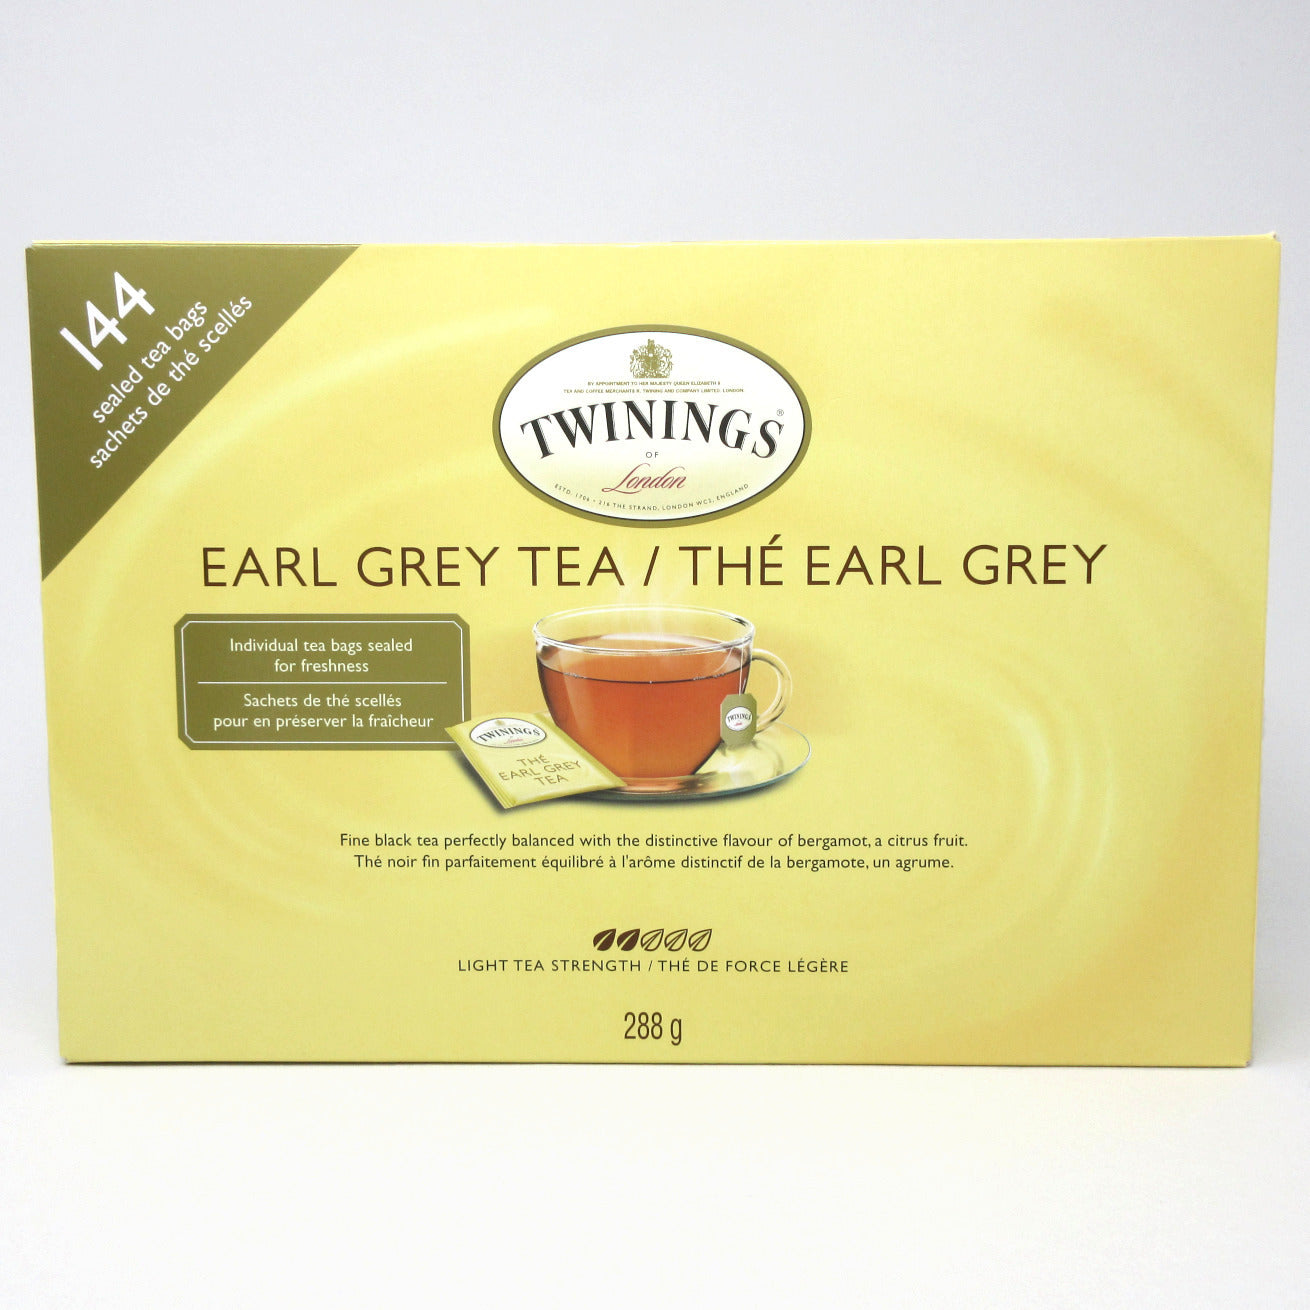 Flour Barrel product image - Twinings Earl Grey Tea